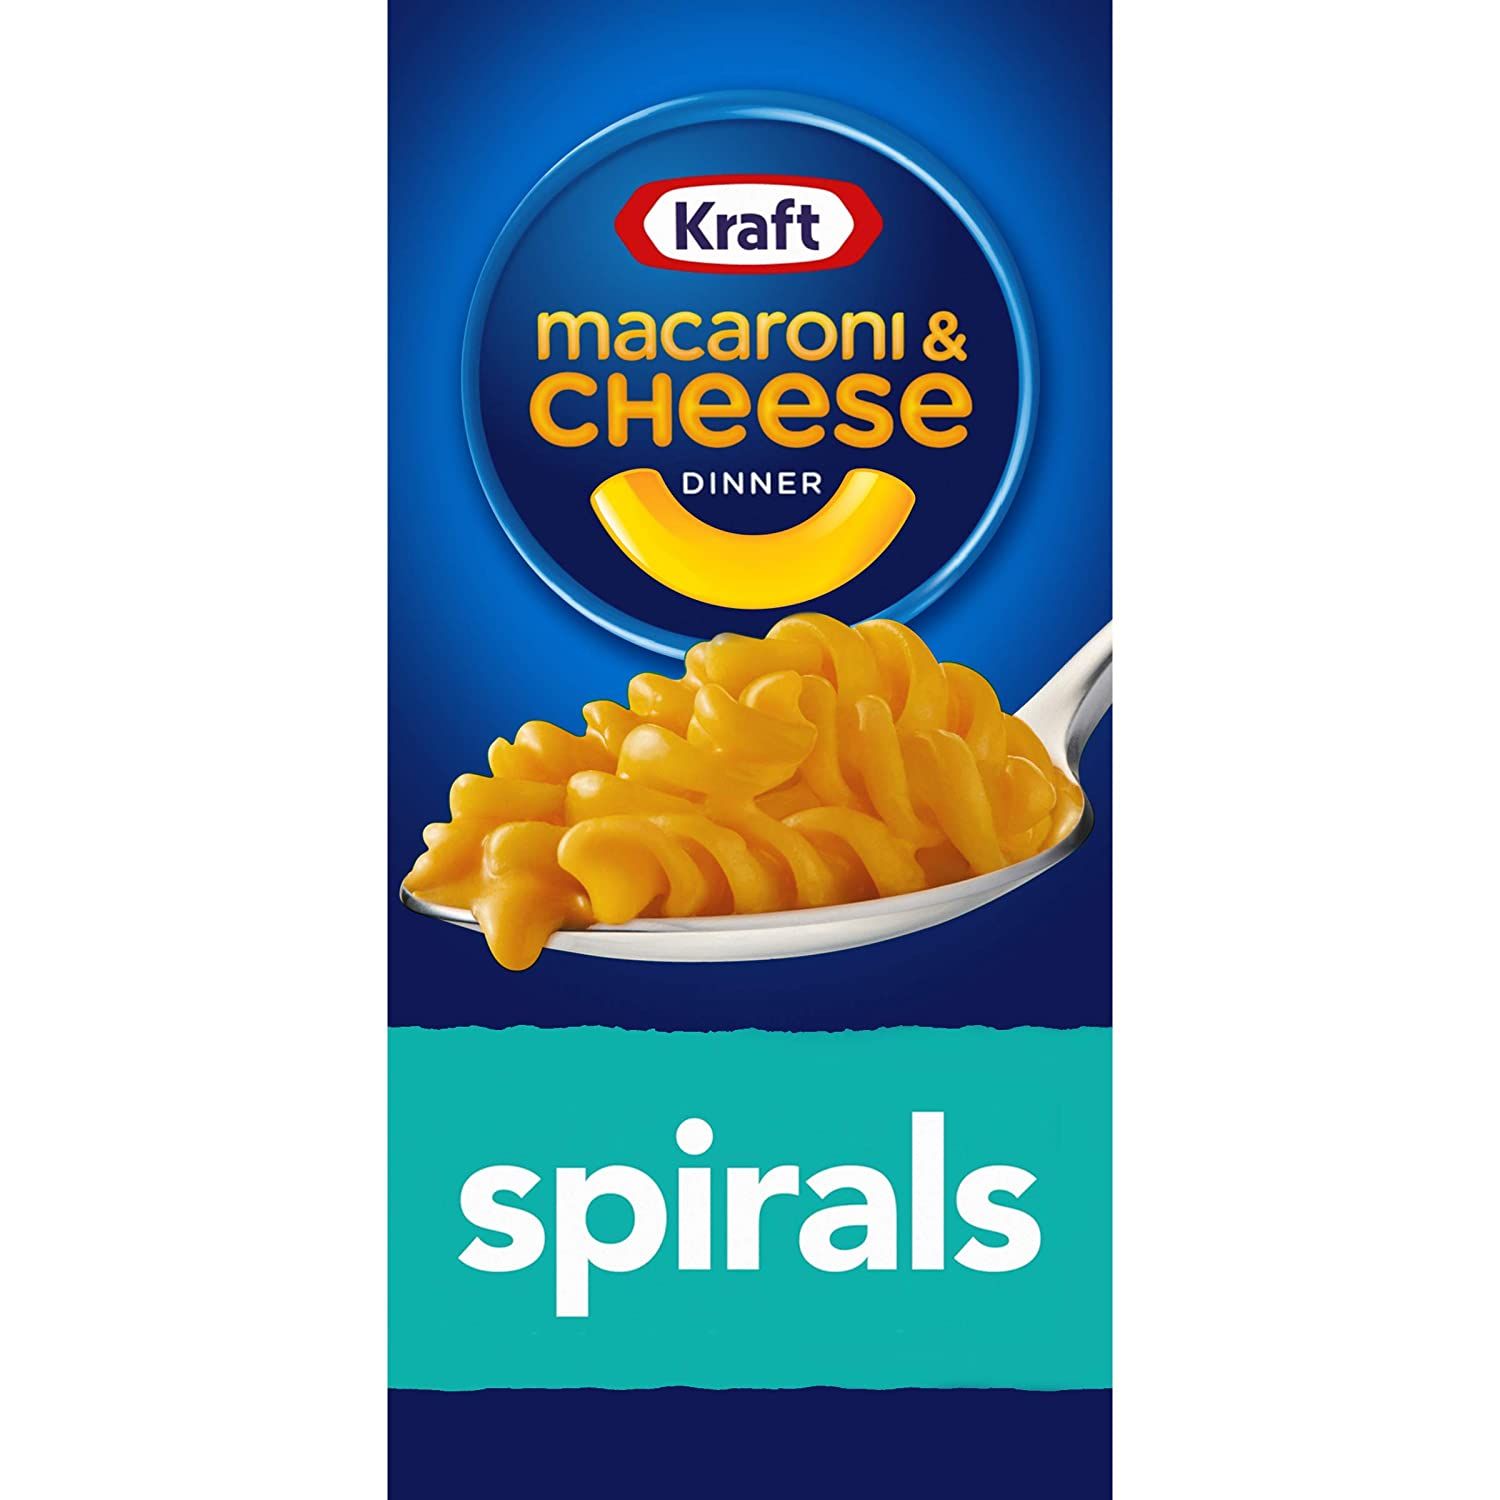 Kraft Macaroni And Cheese Dinner Spirals Image